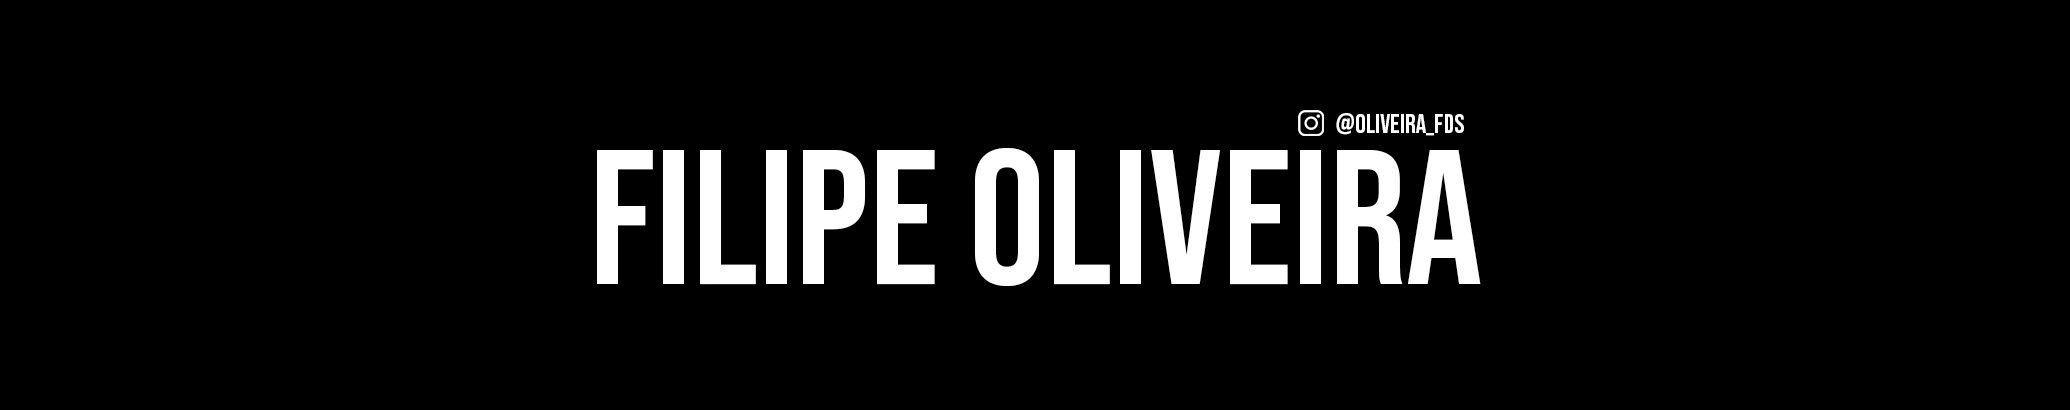 Filipe Oliveira's profile banner